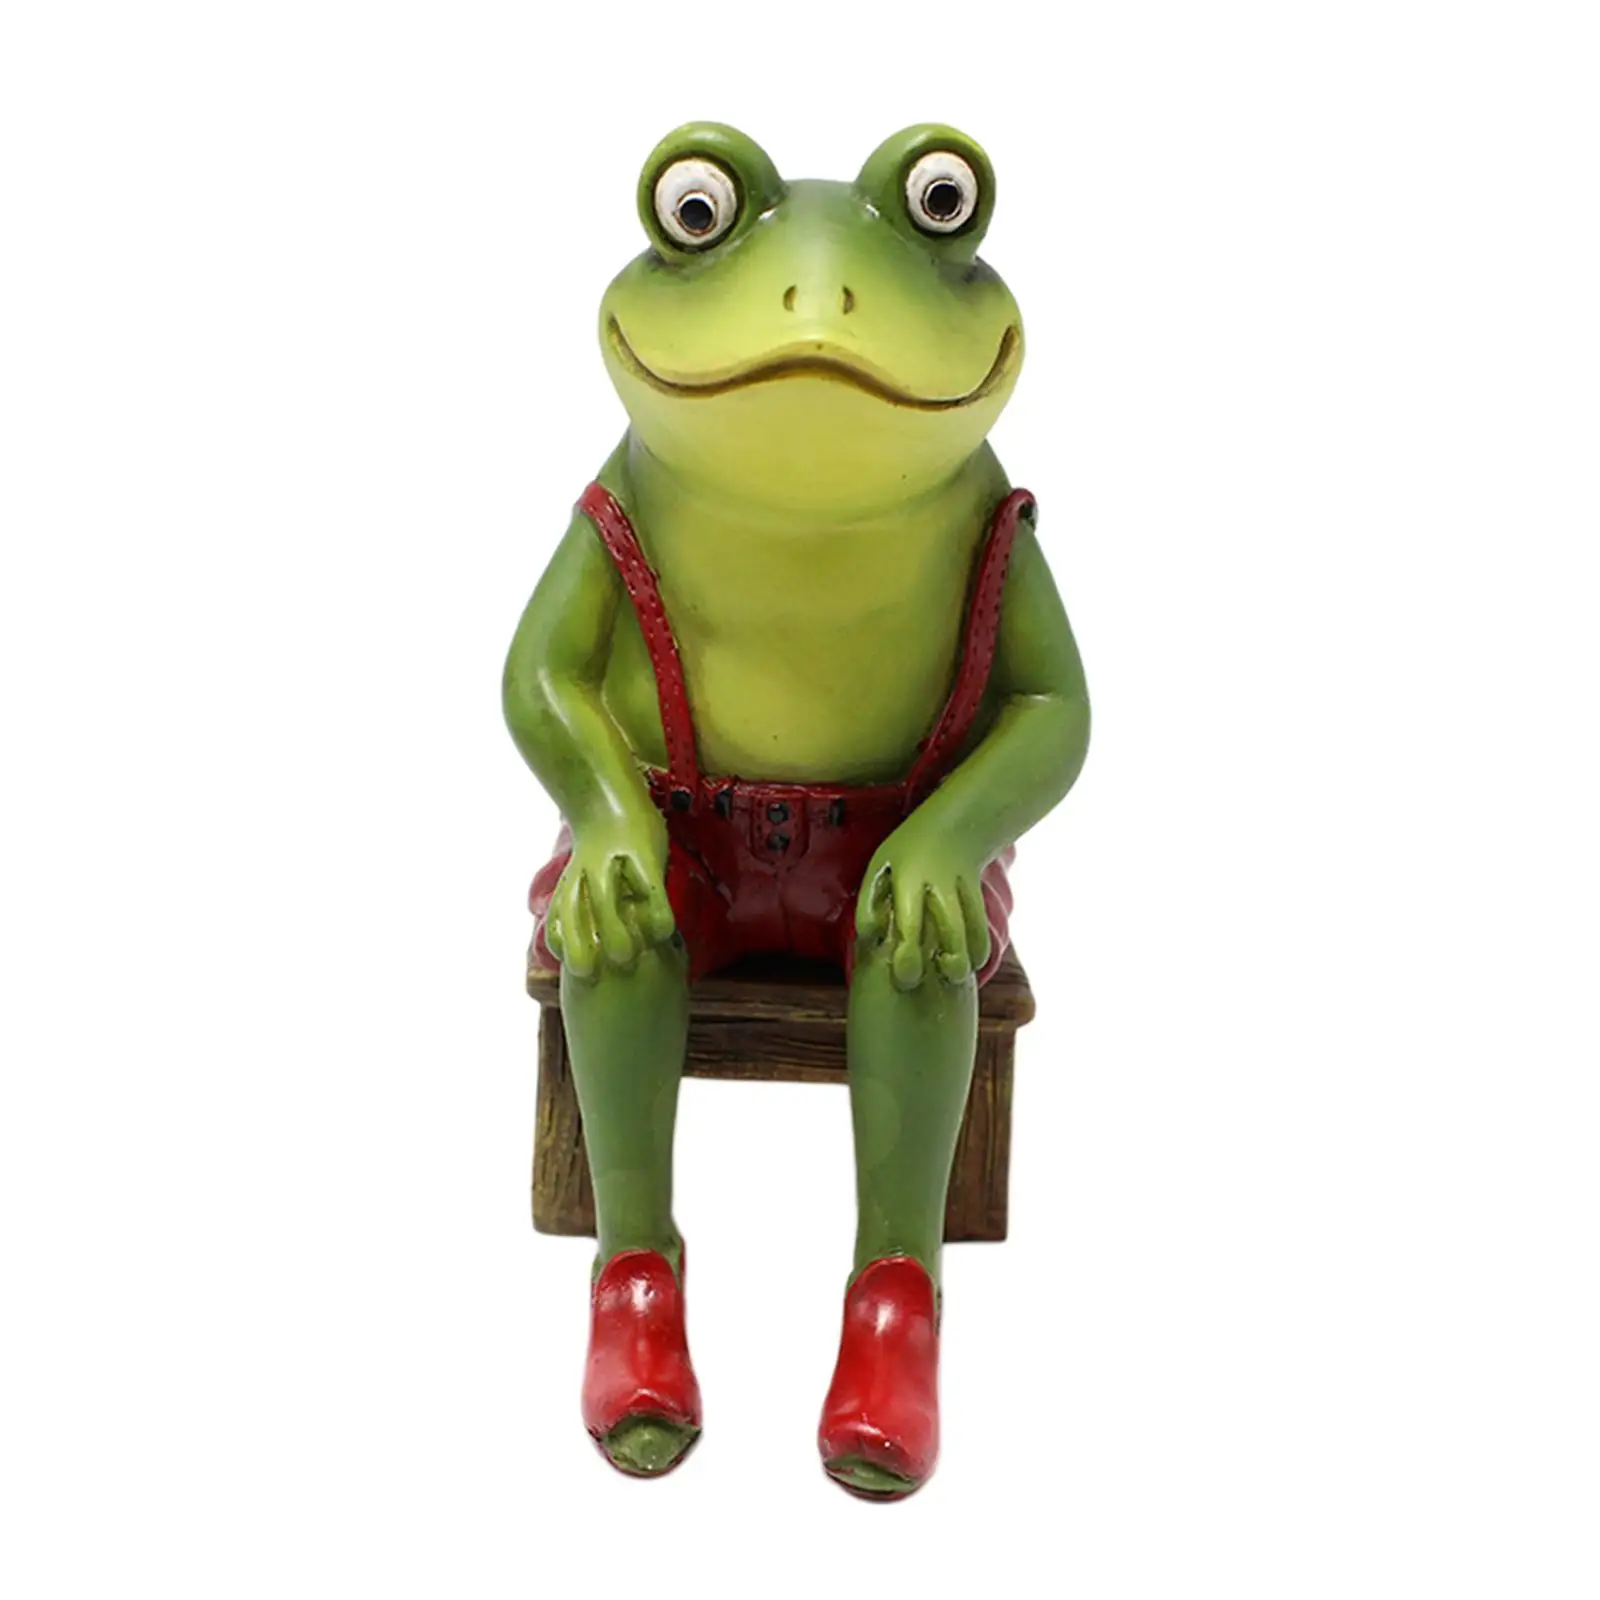 Novelty Frog Figurine Craft Sculpture for Tabletop Bedroom Decorations